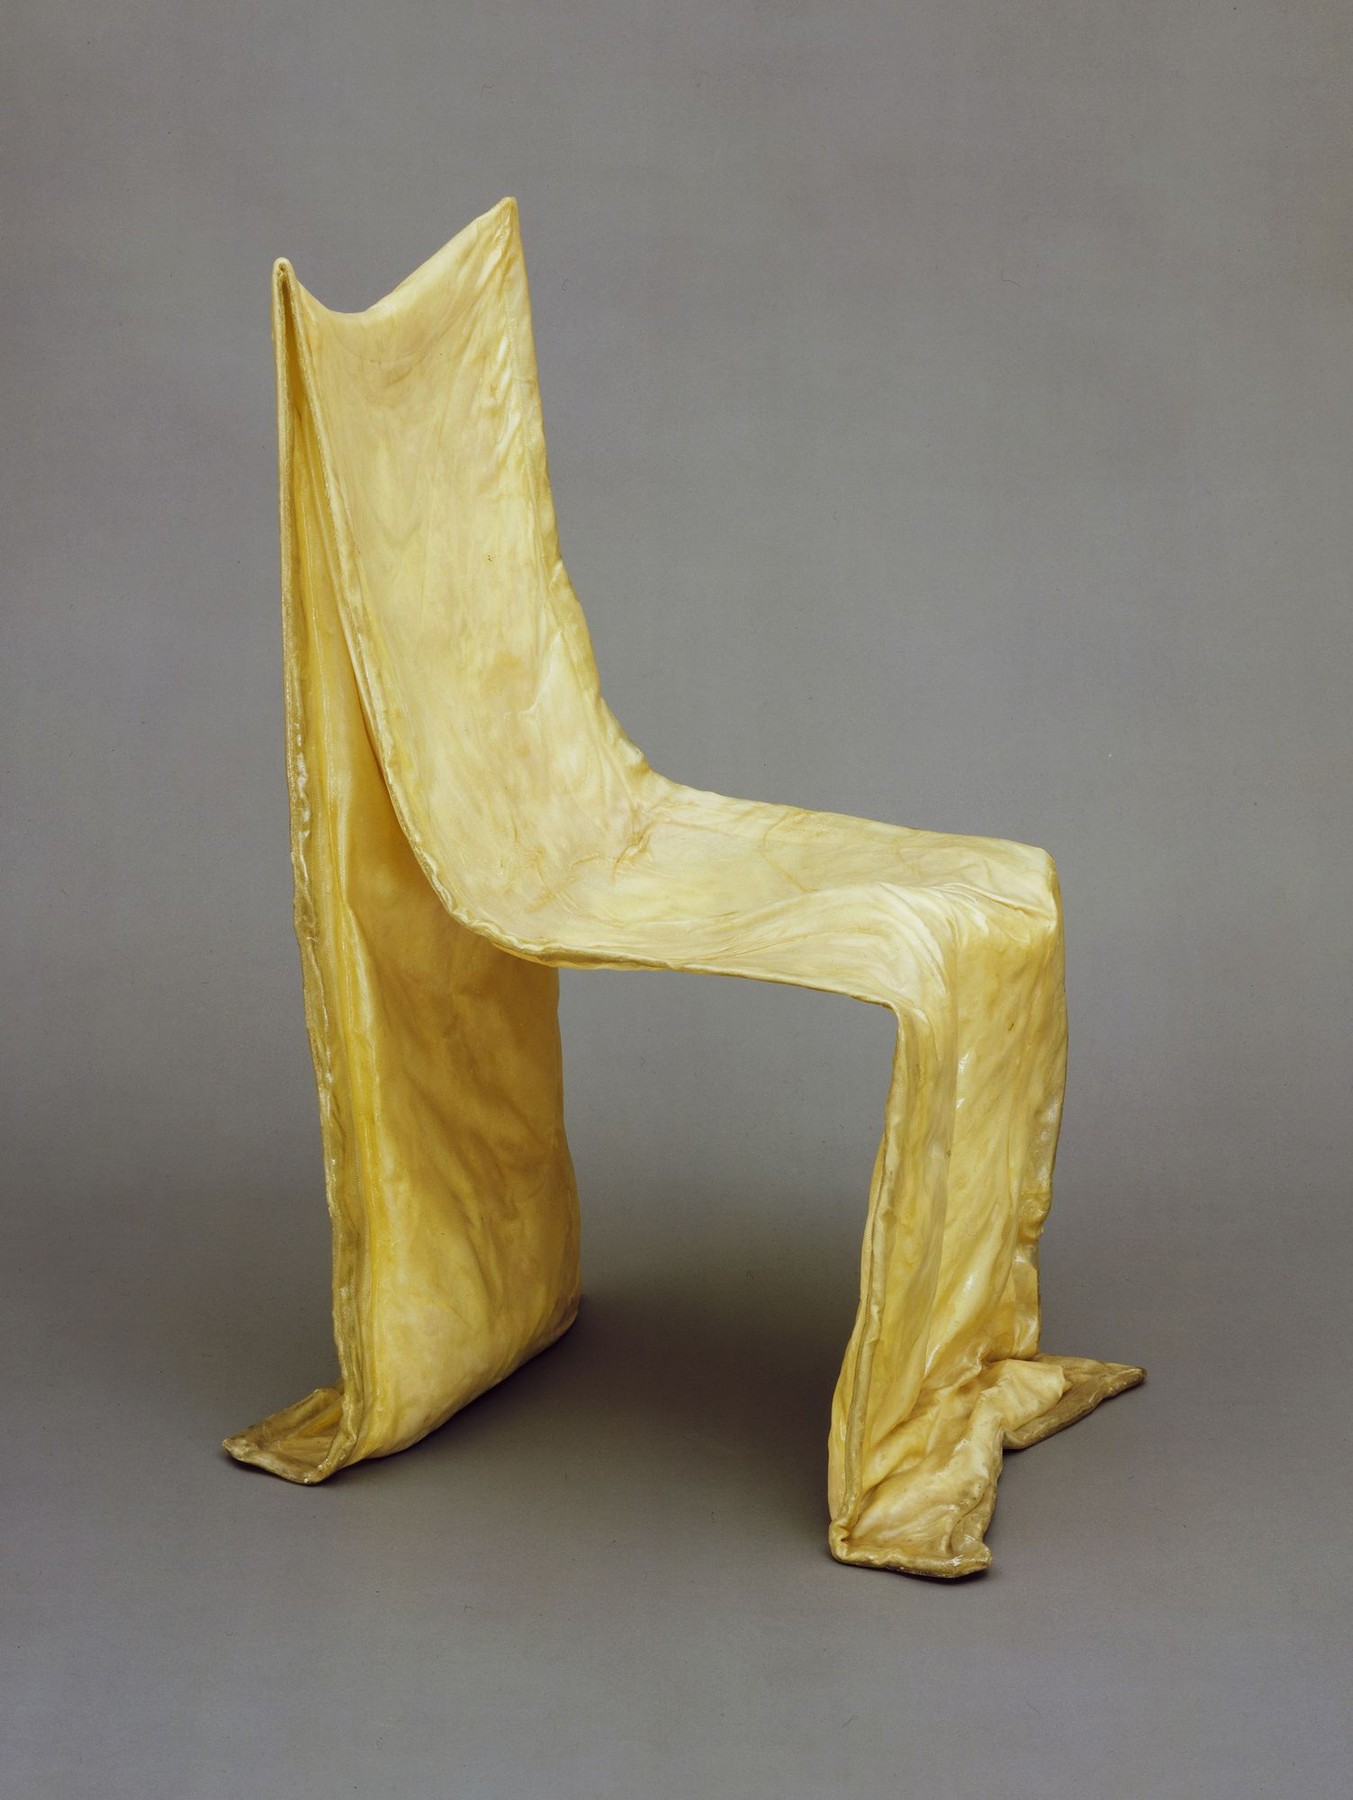  Gaetano Pesce, Golgotha Chair, 1972